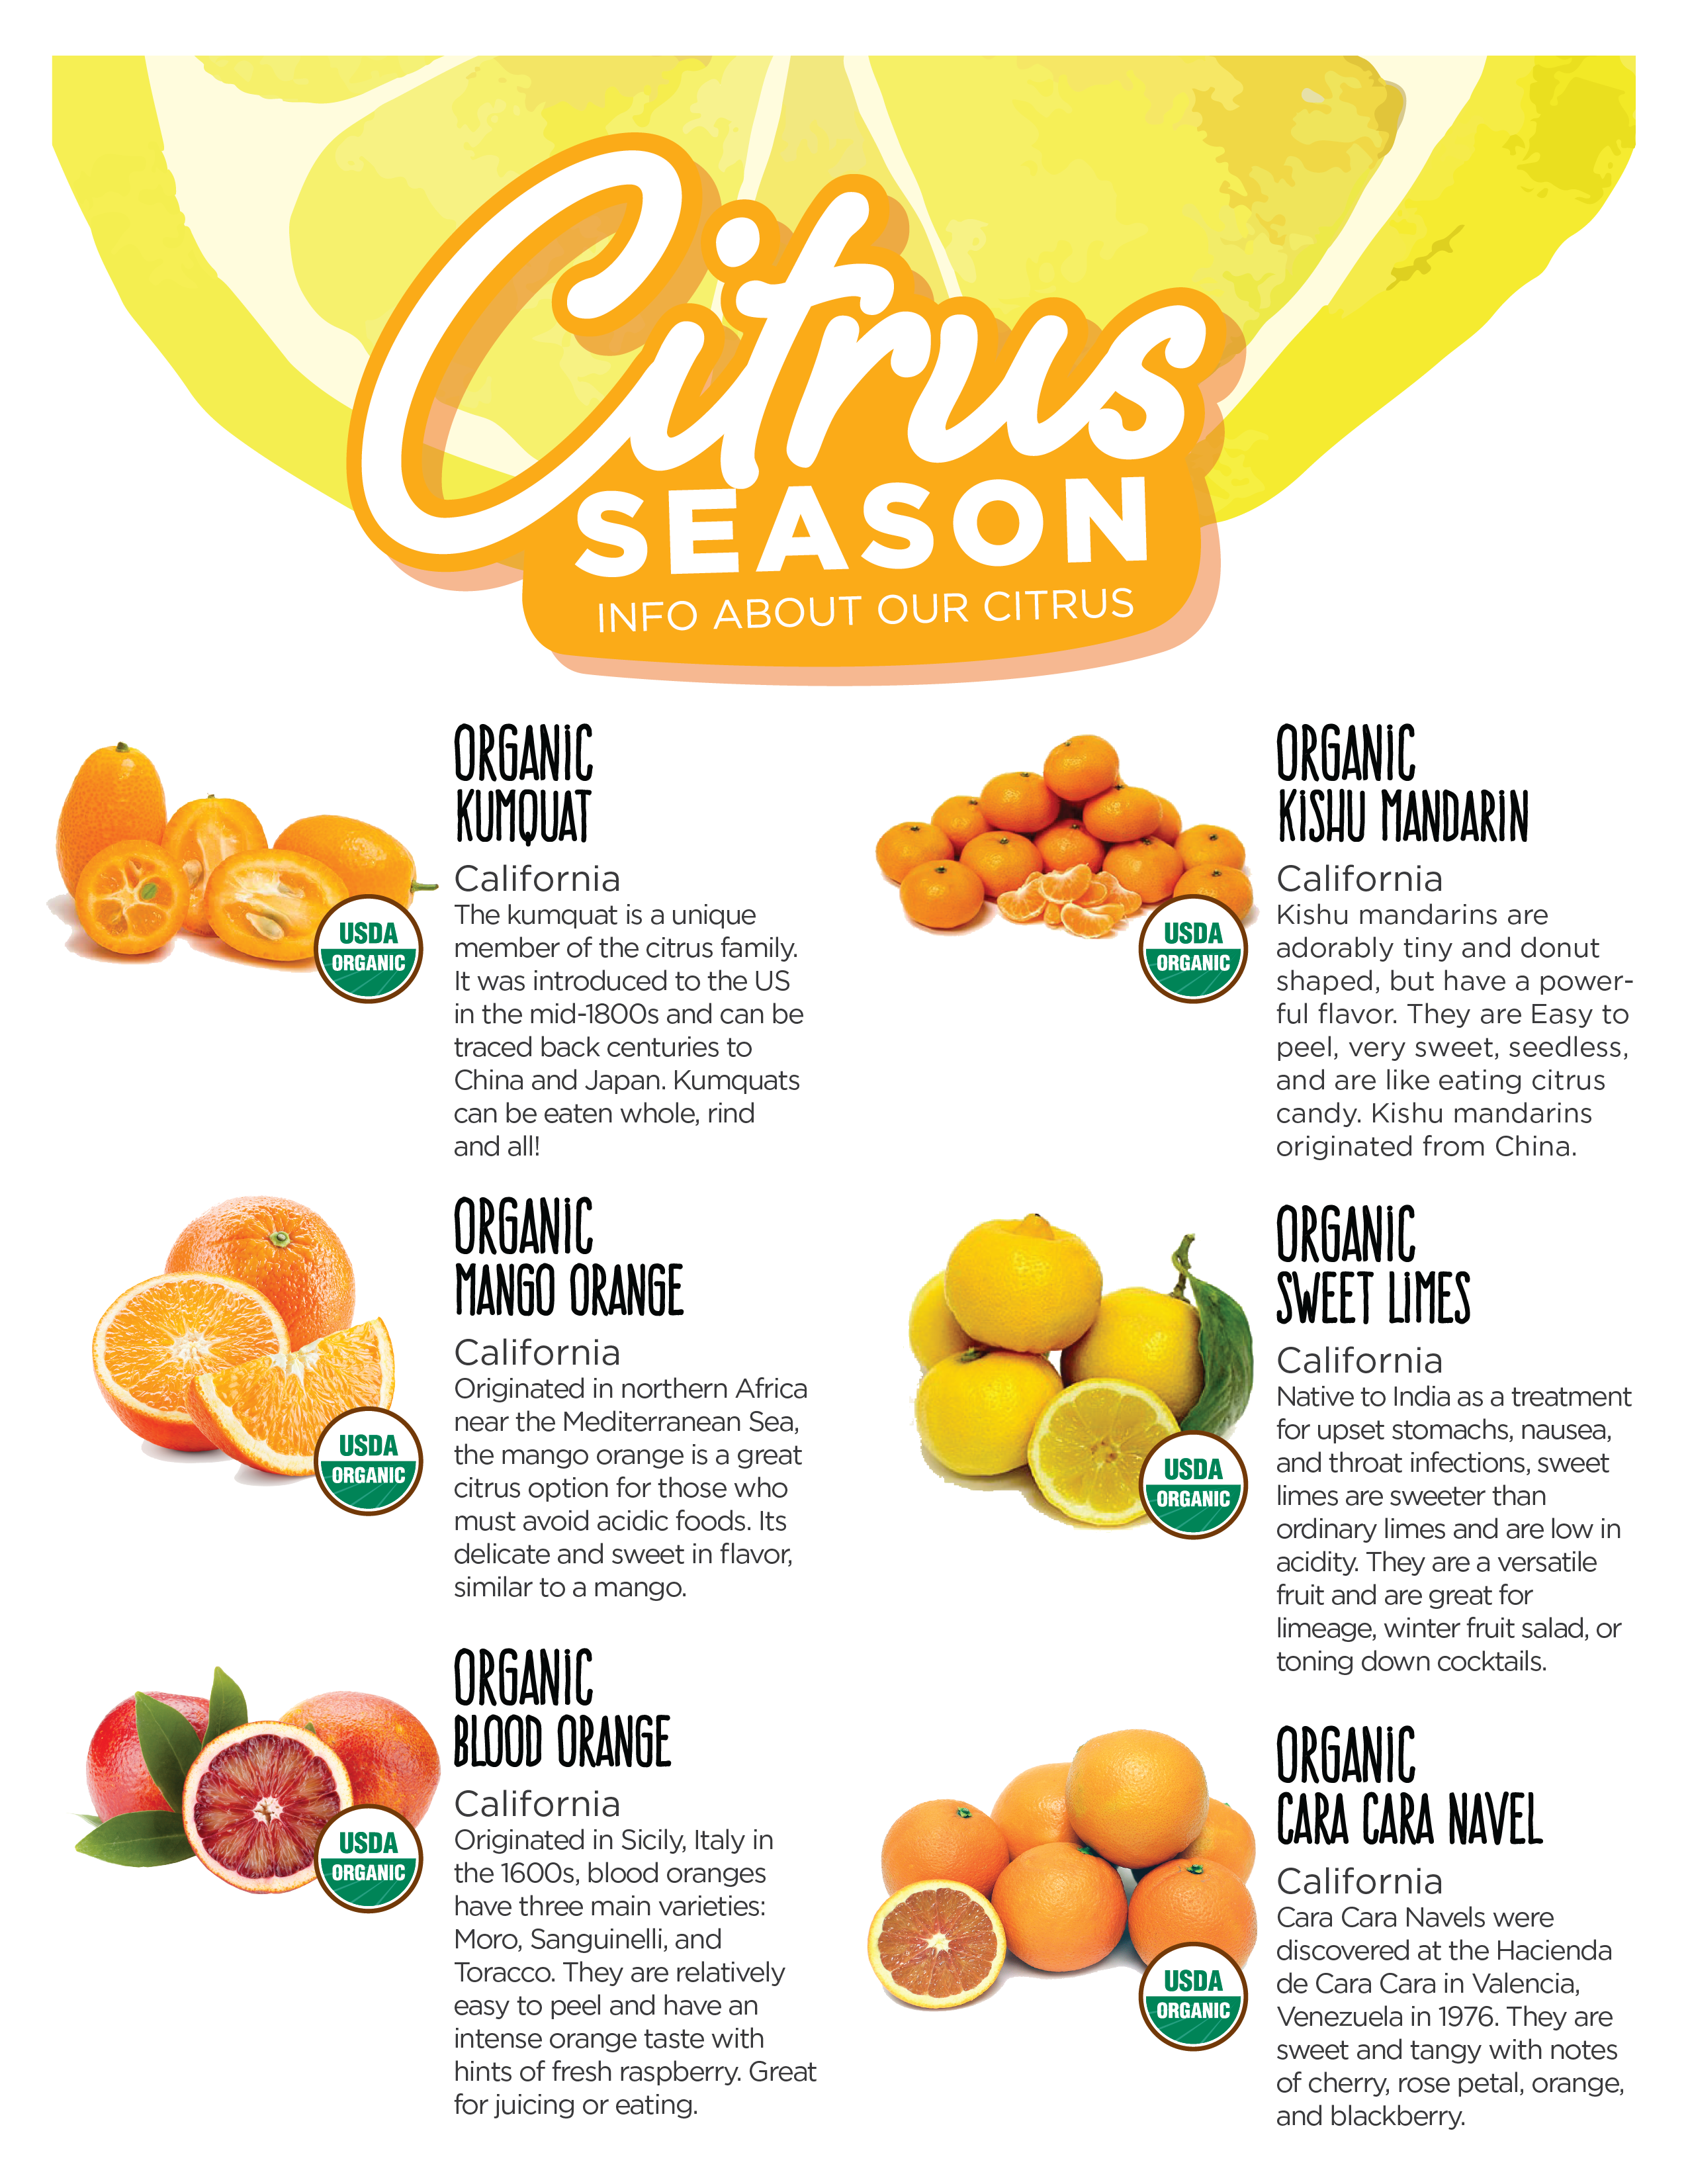 More citrus varieties